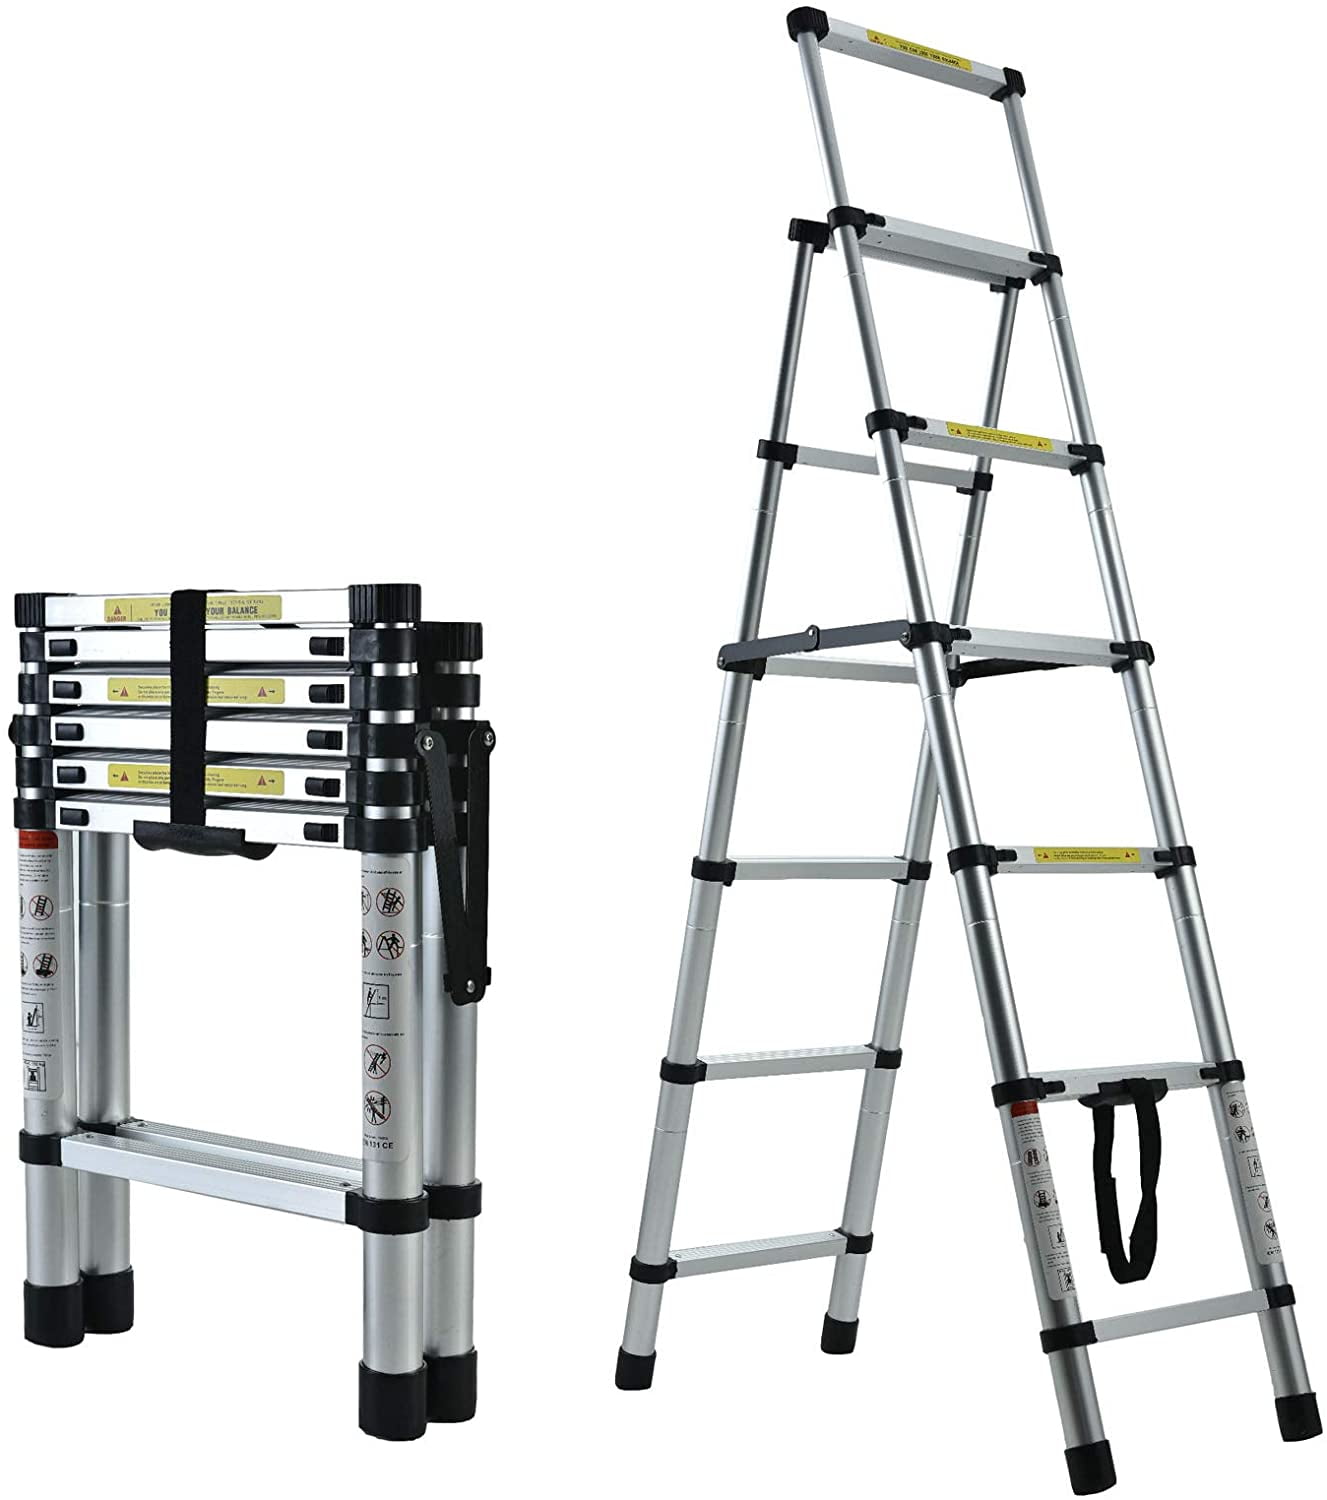 19.5ft Multi Purpose Aluminum Telescopic Ladder Heavy Duty Folding Combination Ladder Extension Ladder